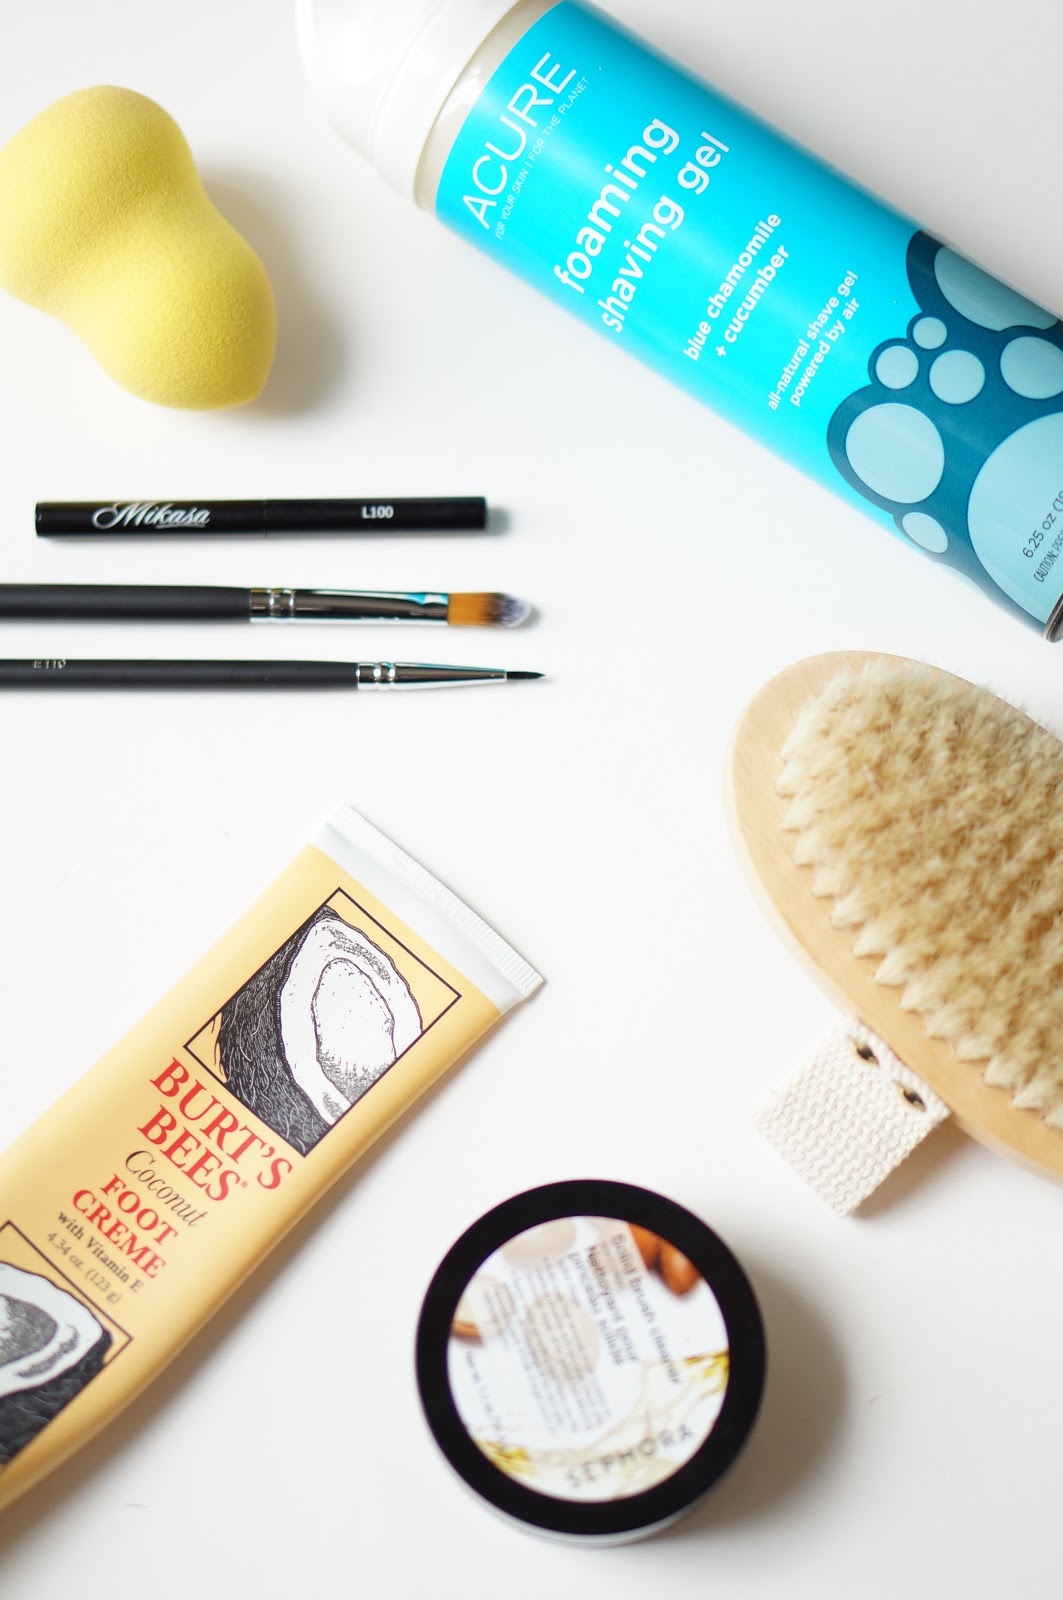 Rebecca Lately Mikasa Beauty Lip Brushes Minamul Dry Brush Acure Shaving Cream Sephora Solid Brush Cleanser